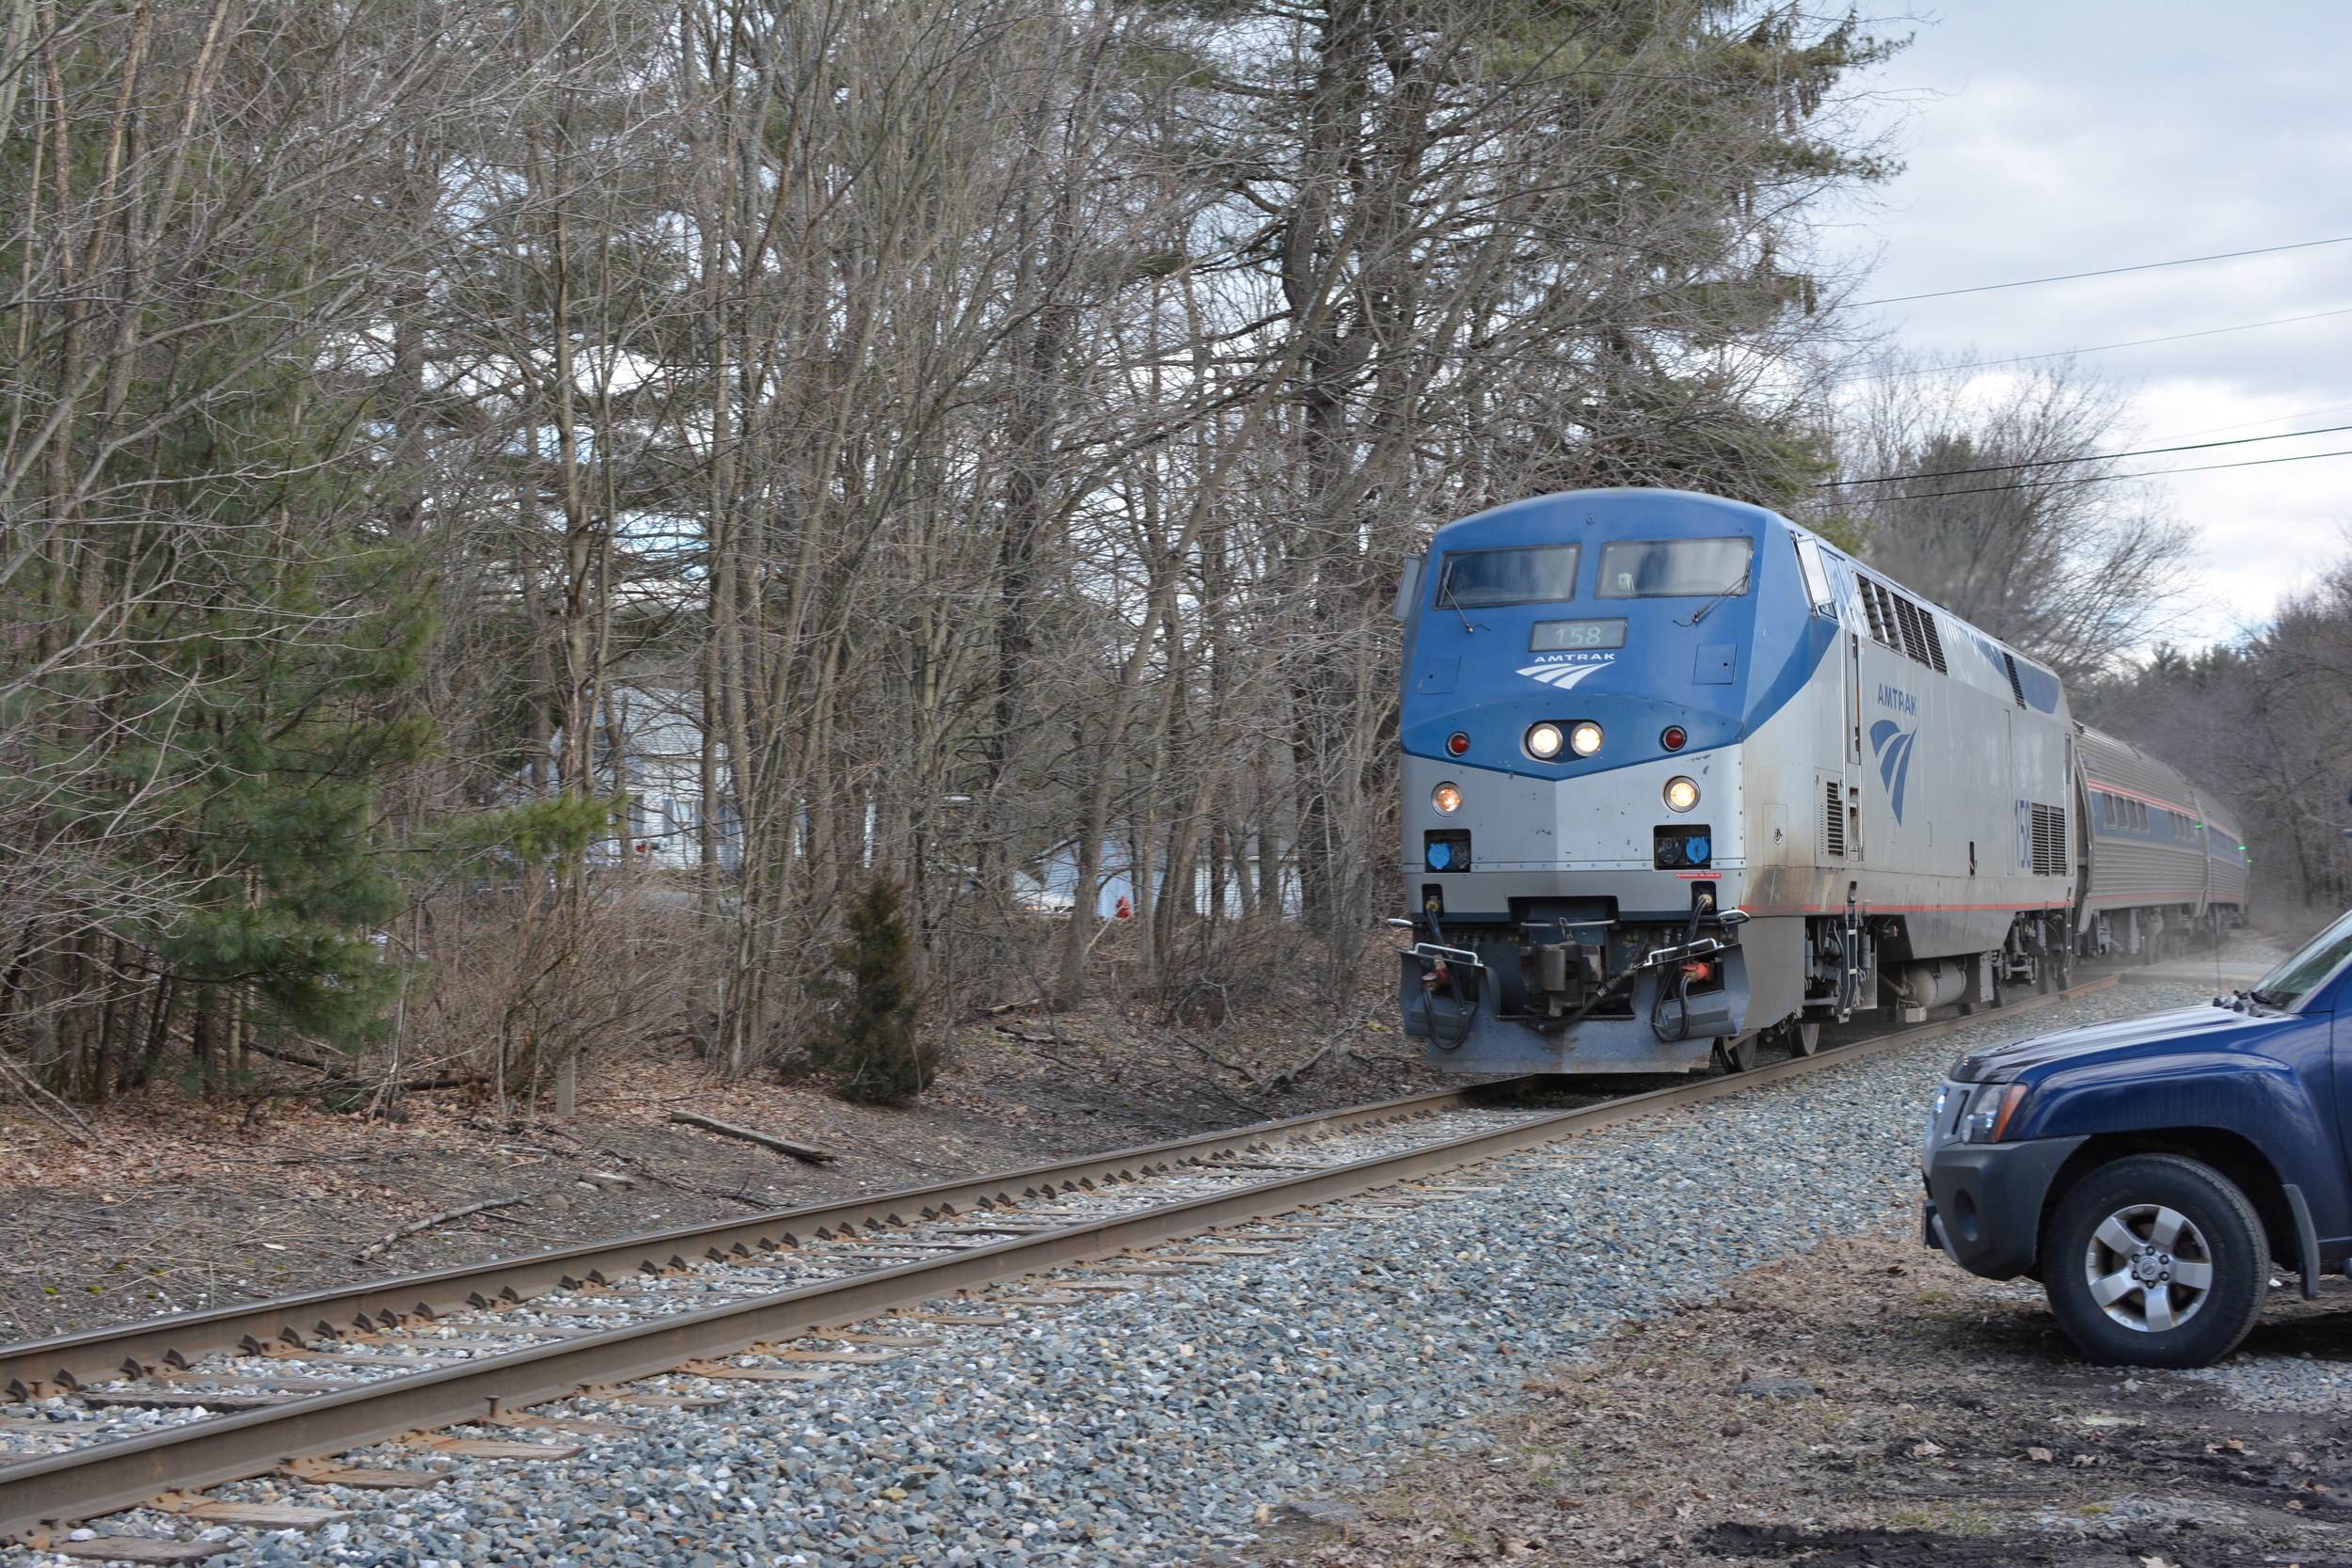 Amtrak Vermonter through Cushman MA. 4/07